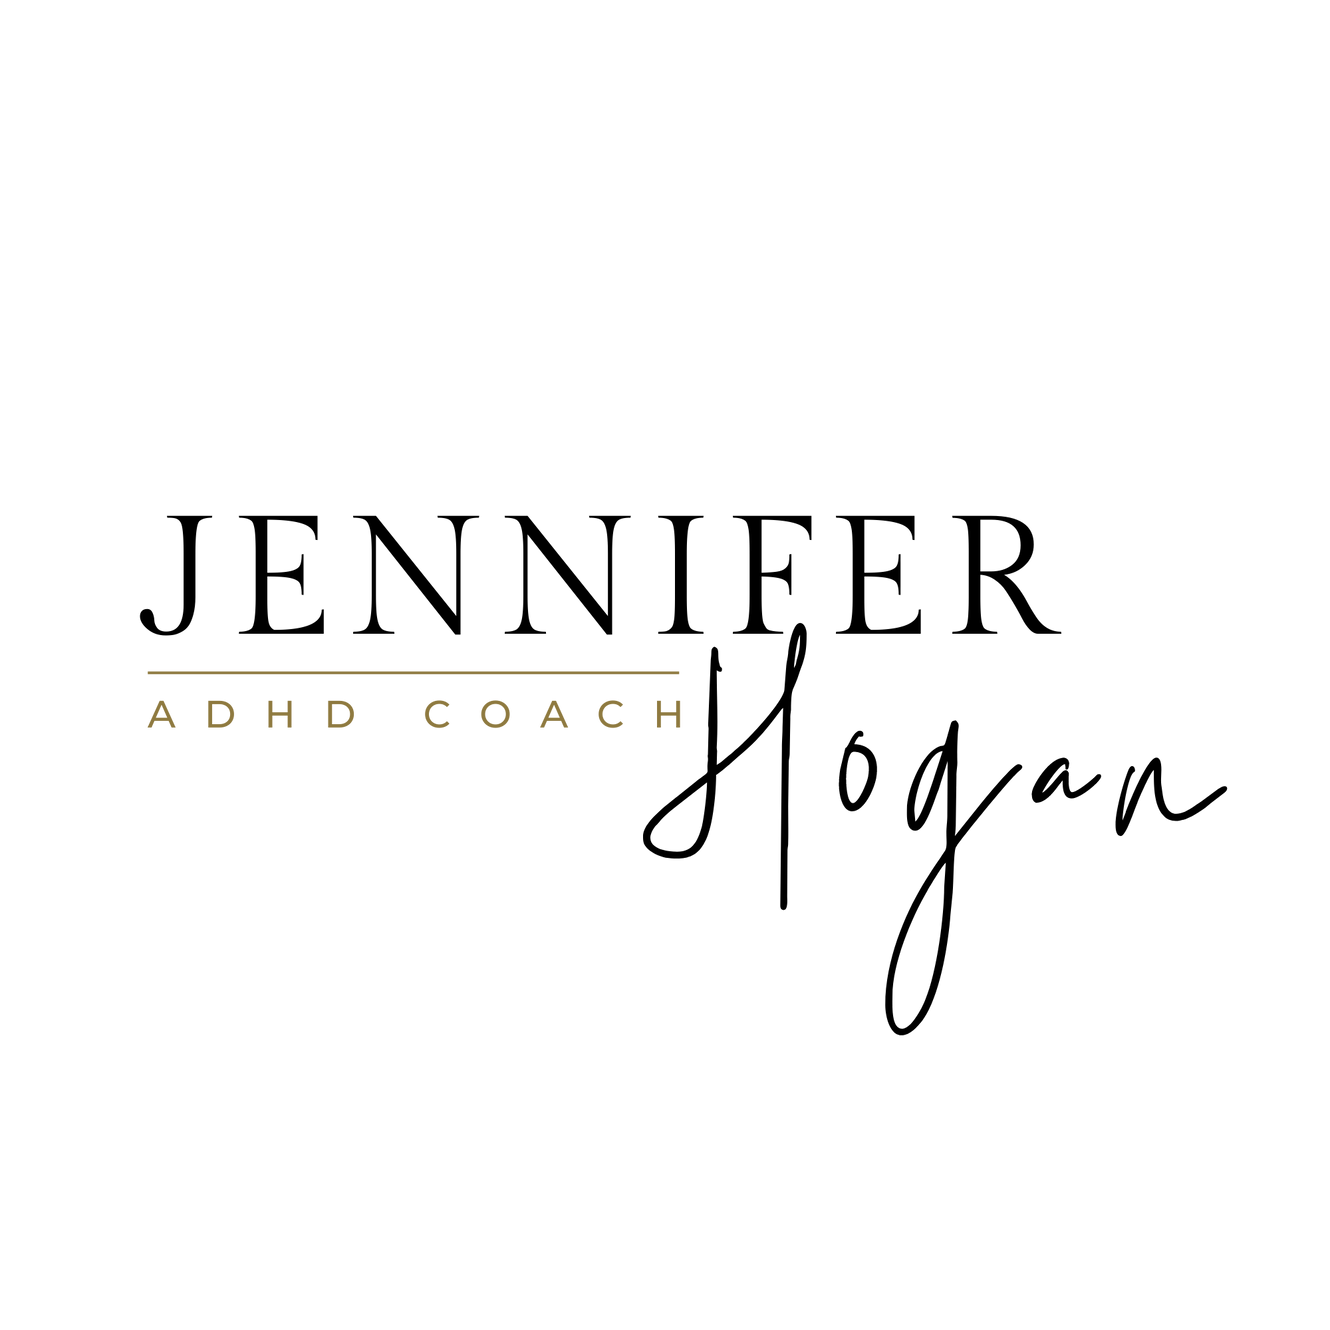 Life Coach for ADHD | ADHD Coach Toronto Canada